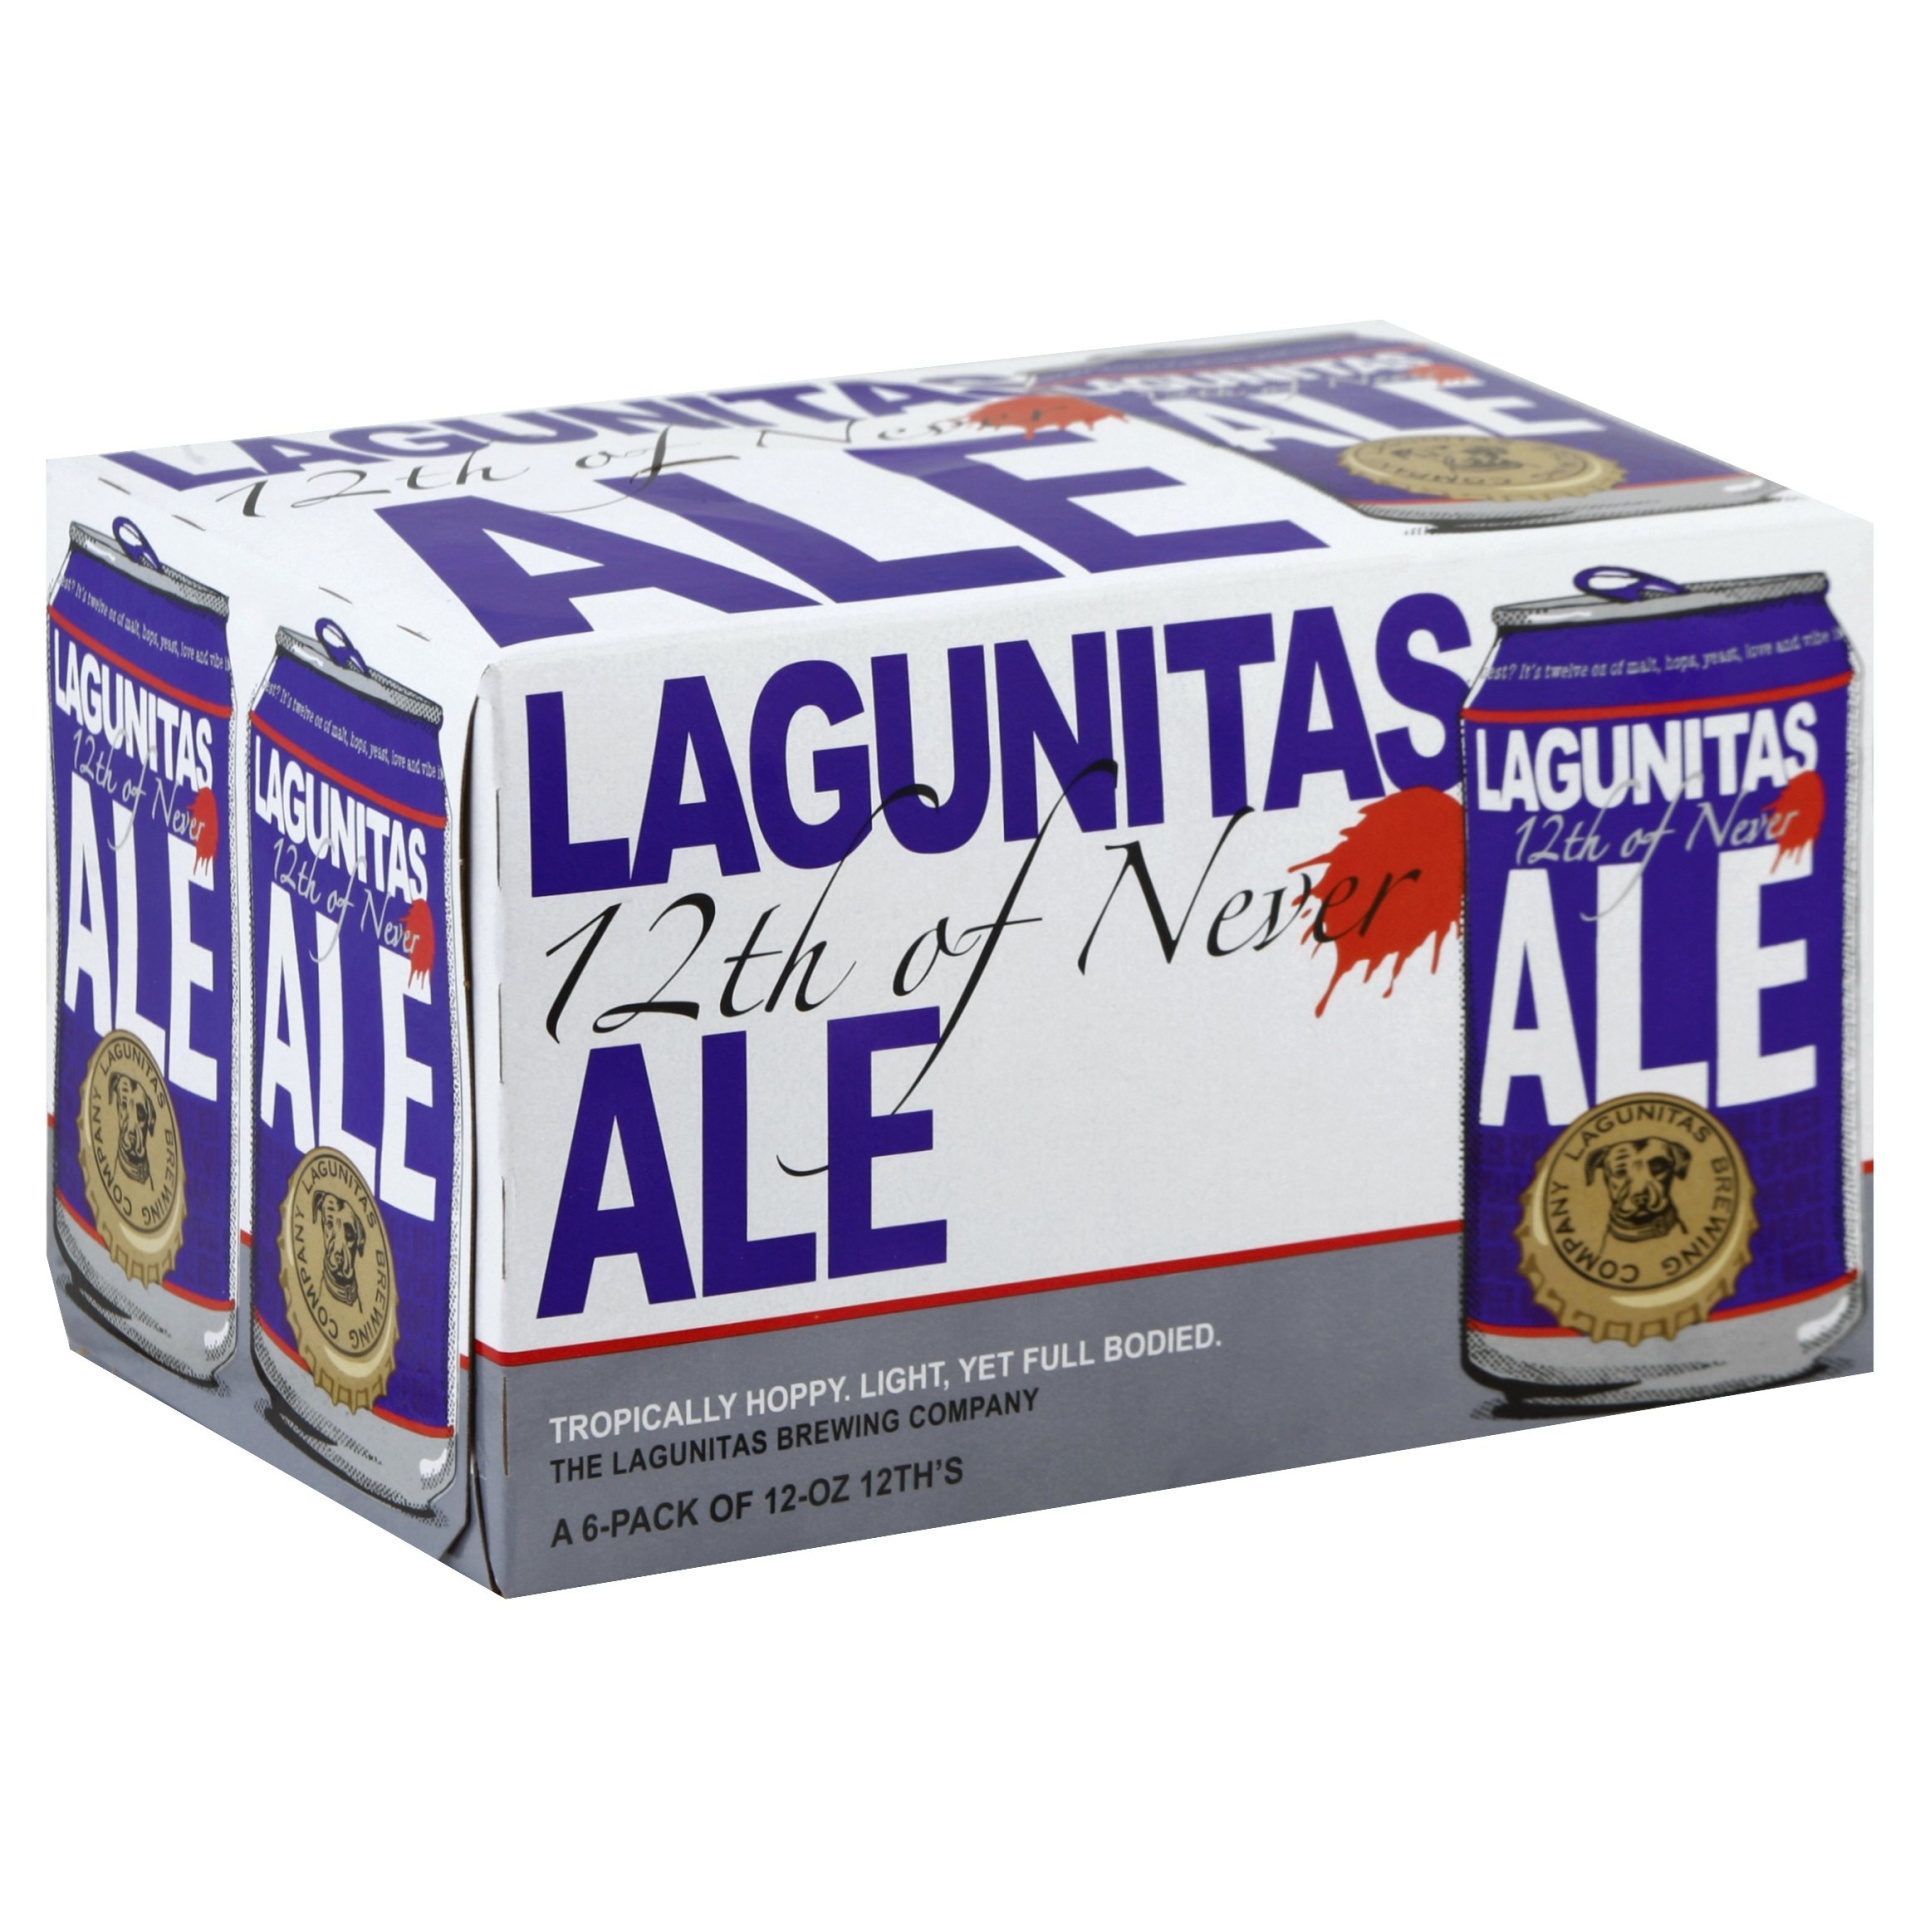 slide 1 of 6, Lagunitas Ale, 12th of Never, 6-Pack, 6 ct; 12 oz